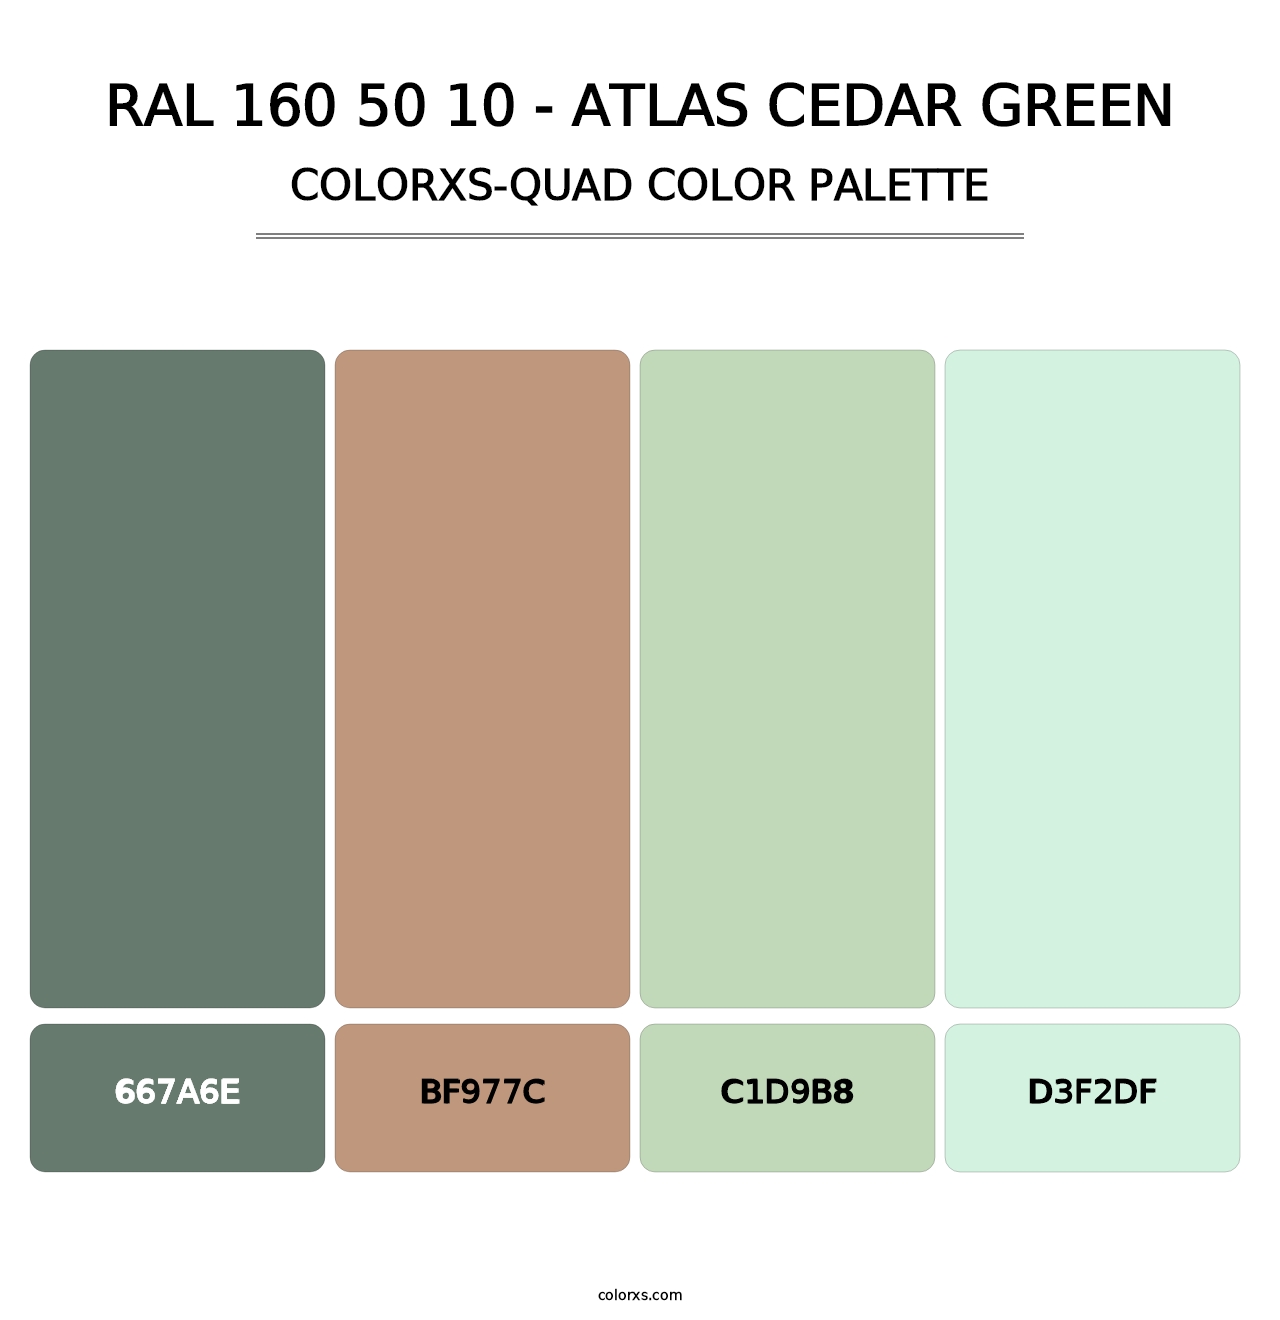 RAL 160 50 10 - Atlas Cedar Green - Colorxs Quad Palette